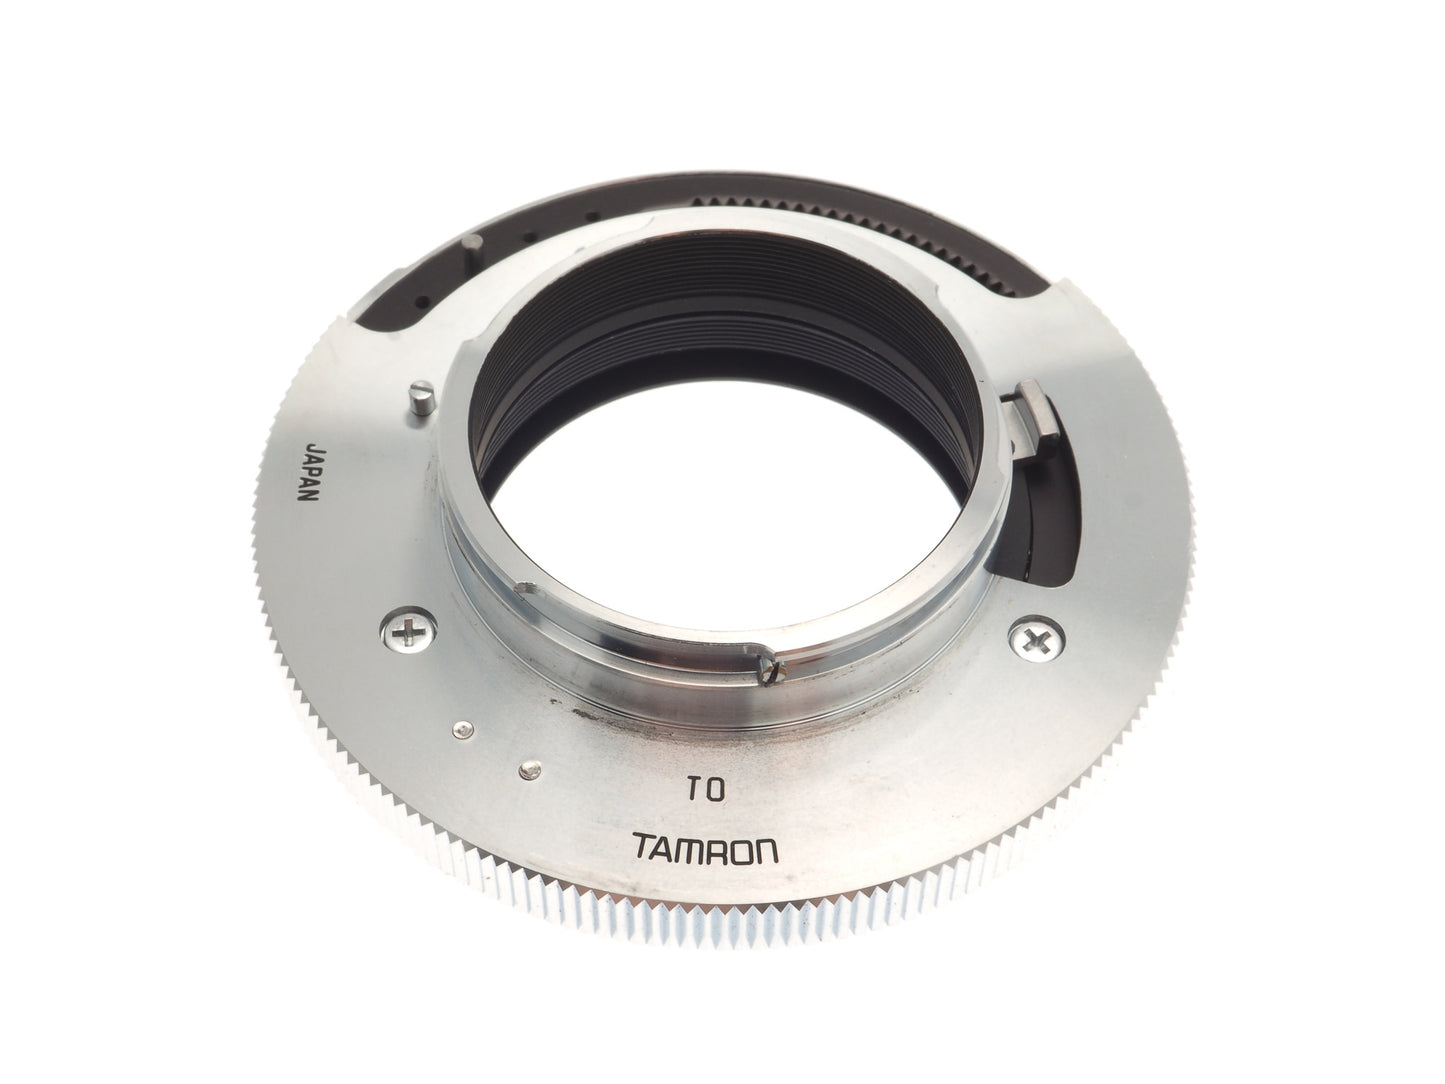 Tamron Adaptall 2 - Topcon RE (Exakta) - Lens Adapter